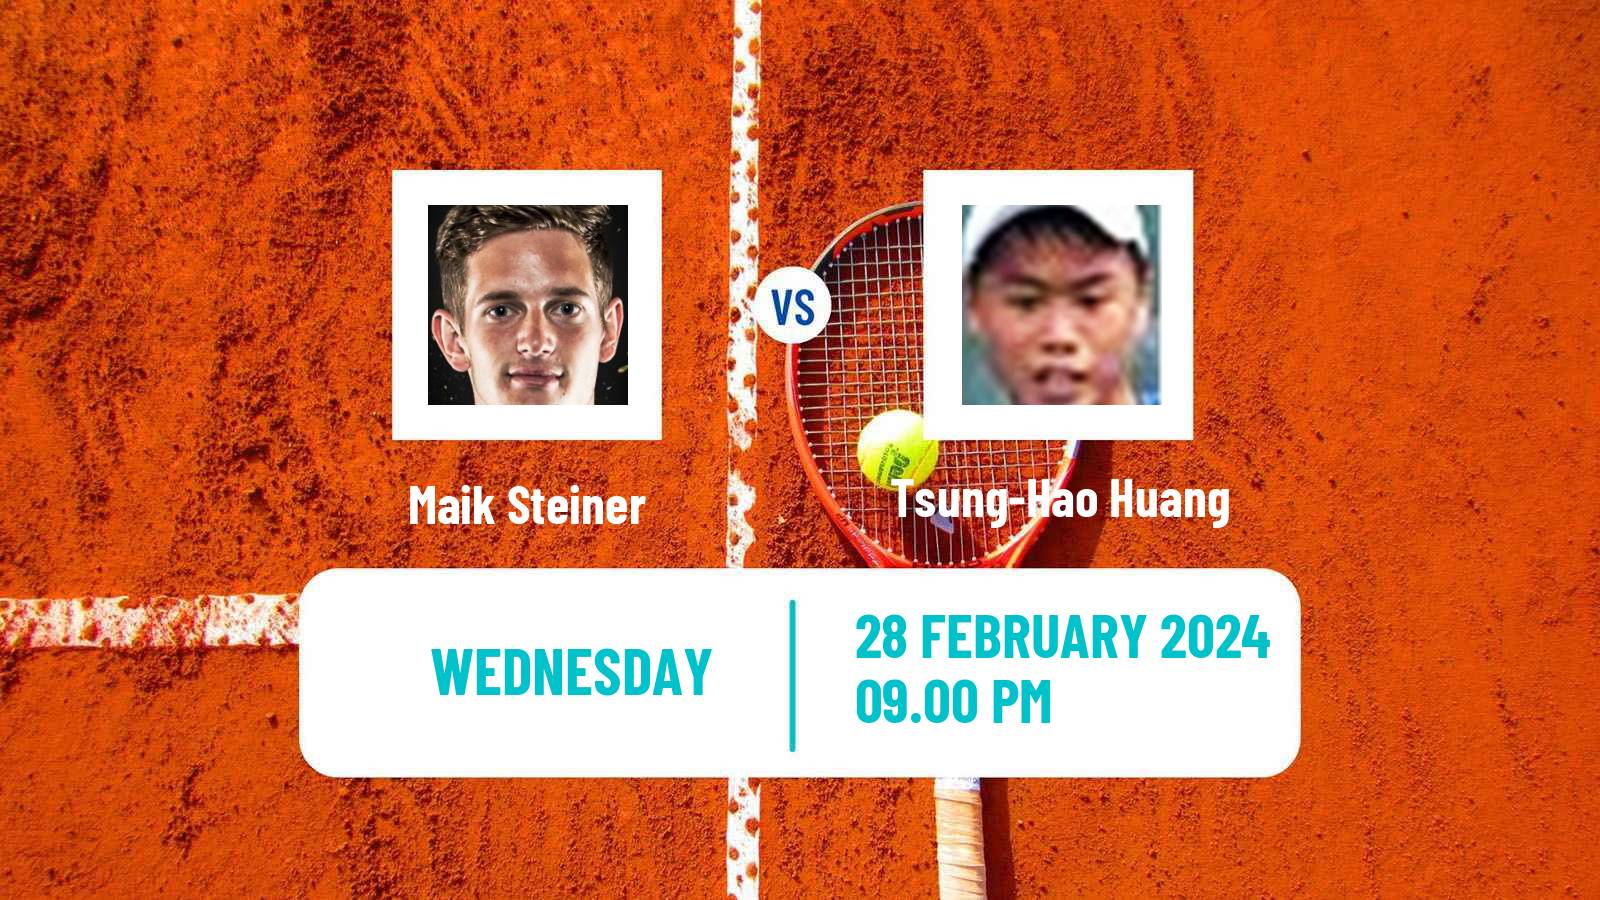 Tennis ITF M15 Nakhon Si Thammarat 3 Men Maik Steiner - Tsung-Hao Huang